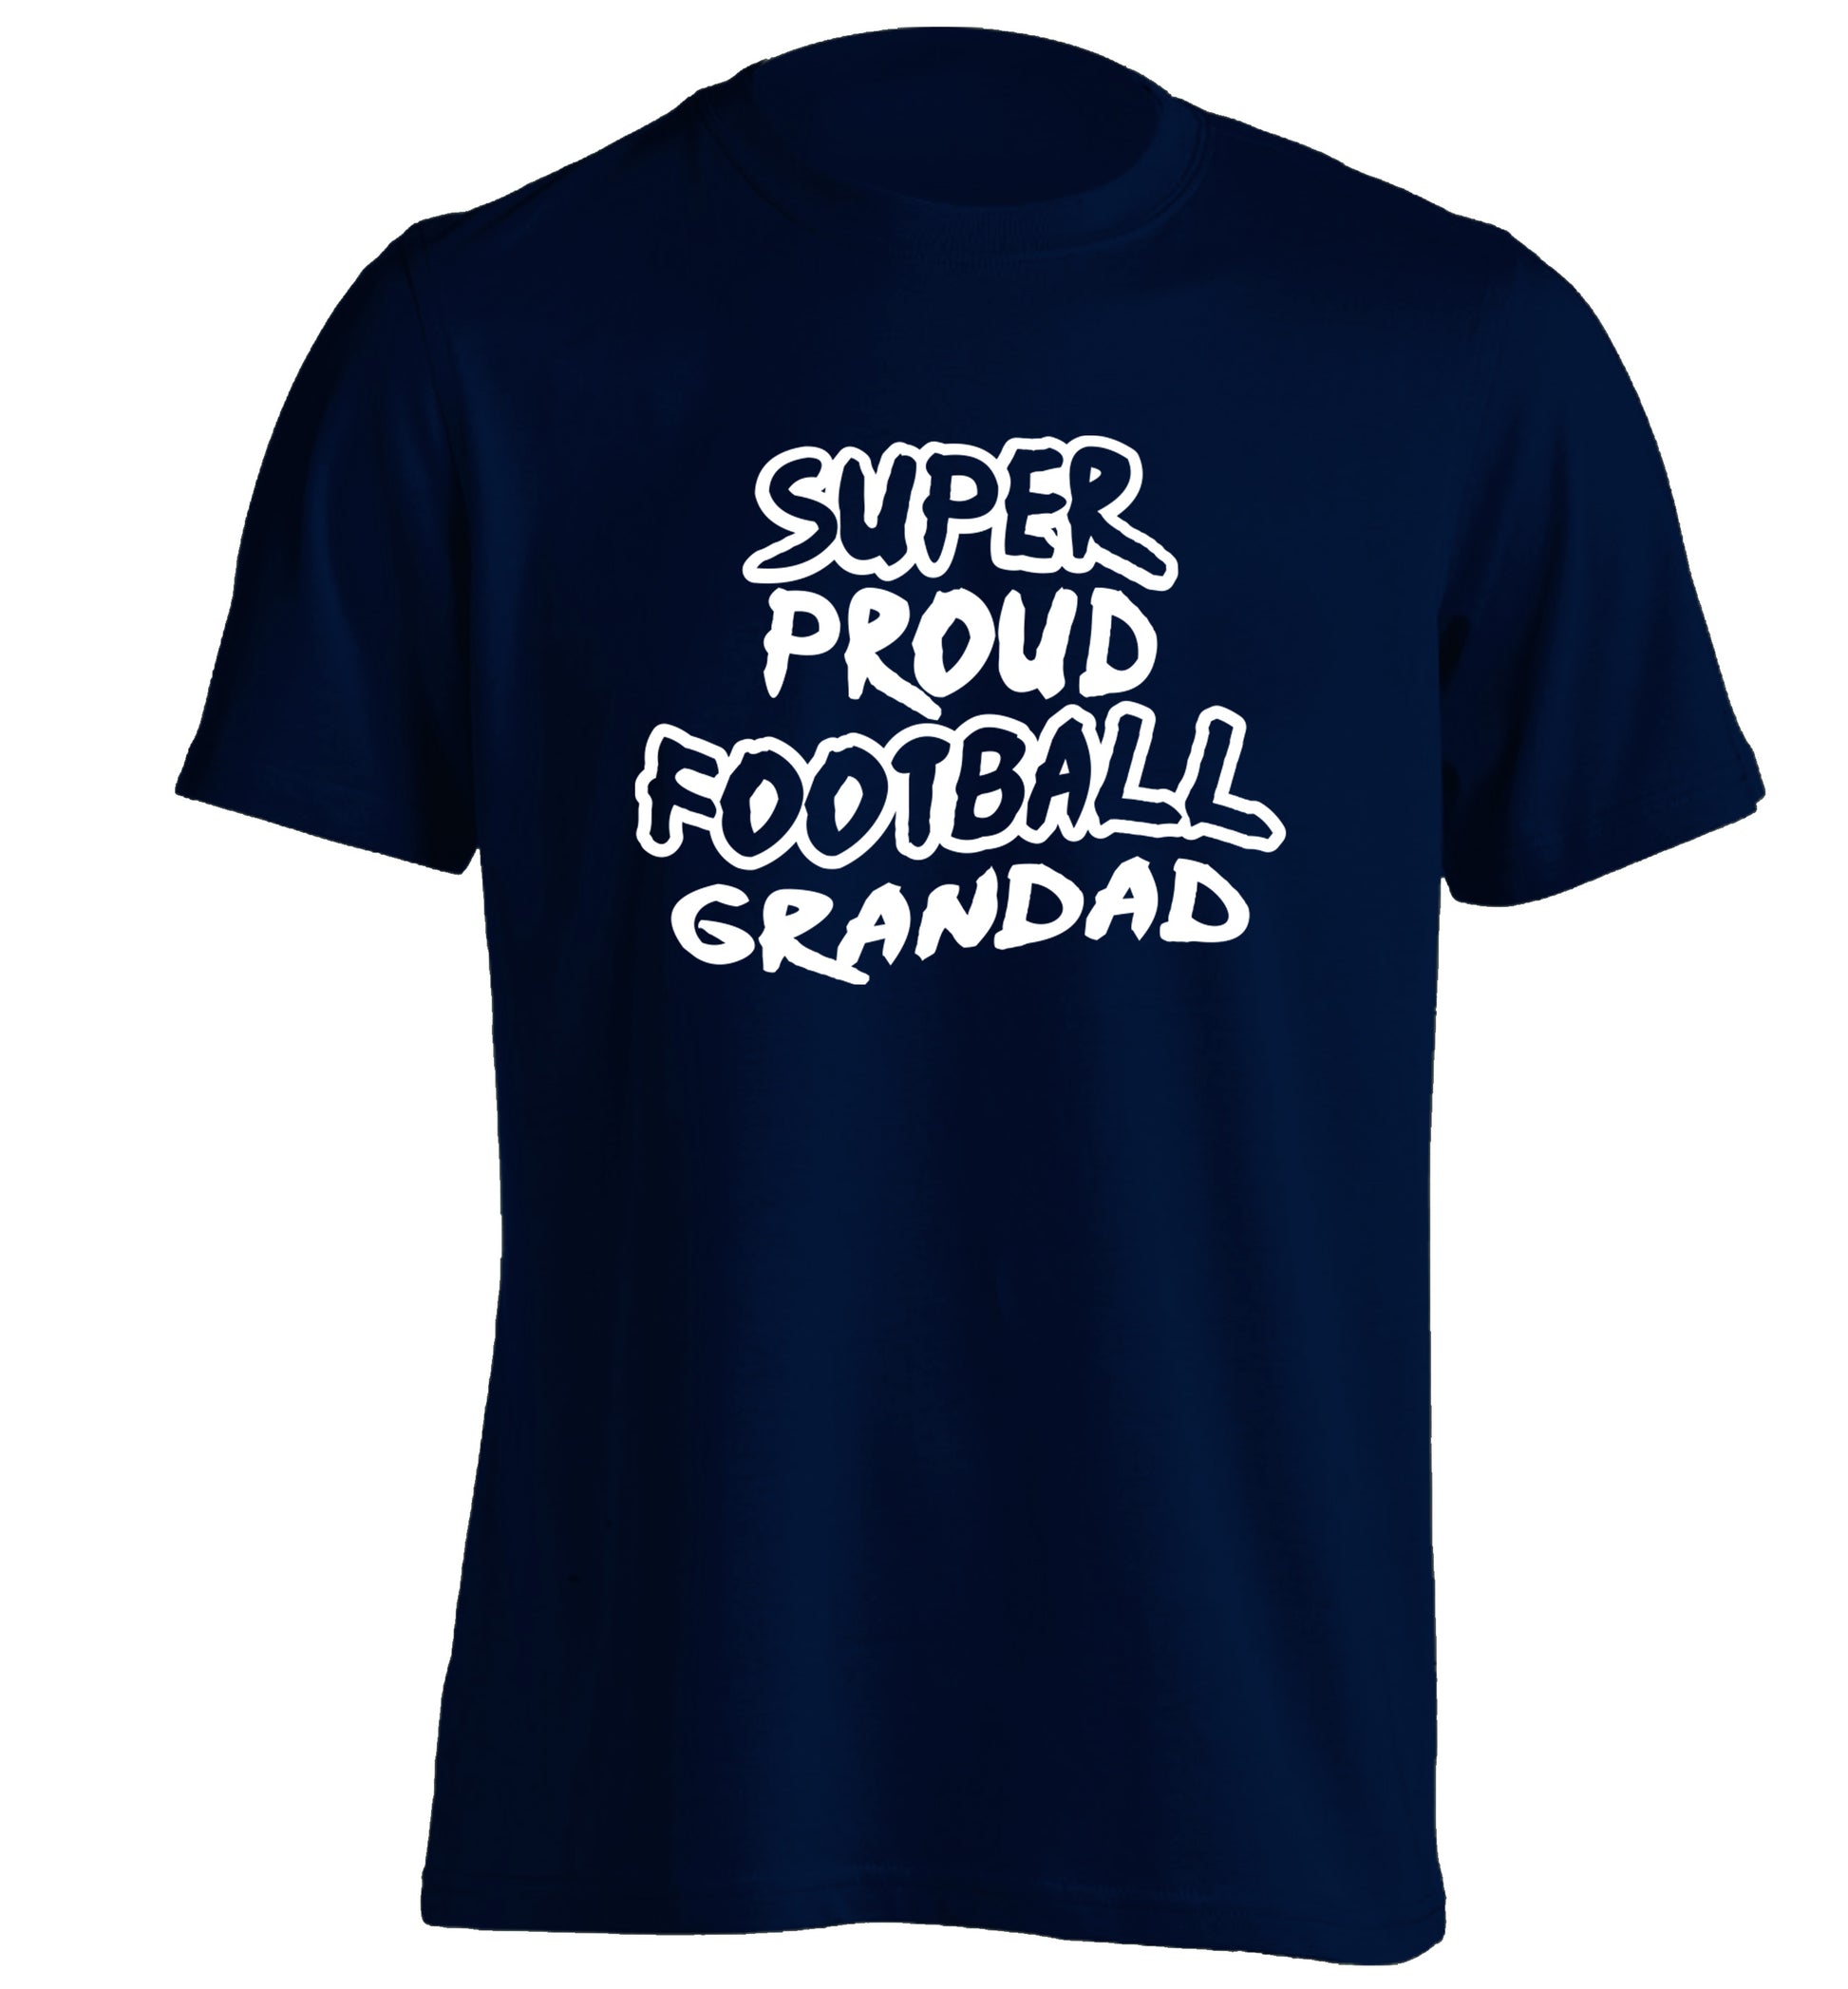 Super proud football grandad adults unisexnavy Tshirt 2XL